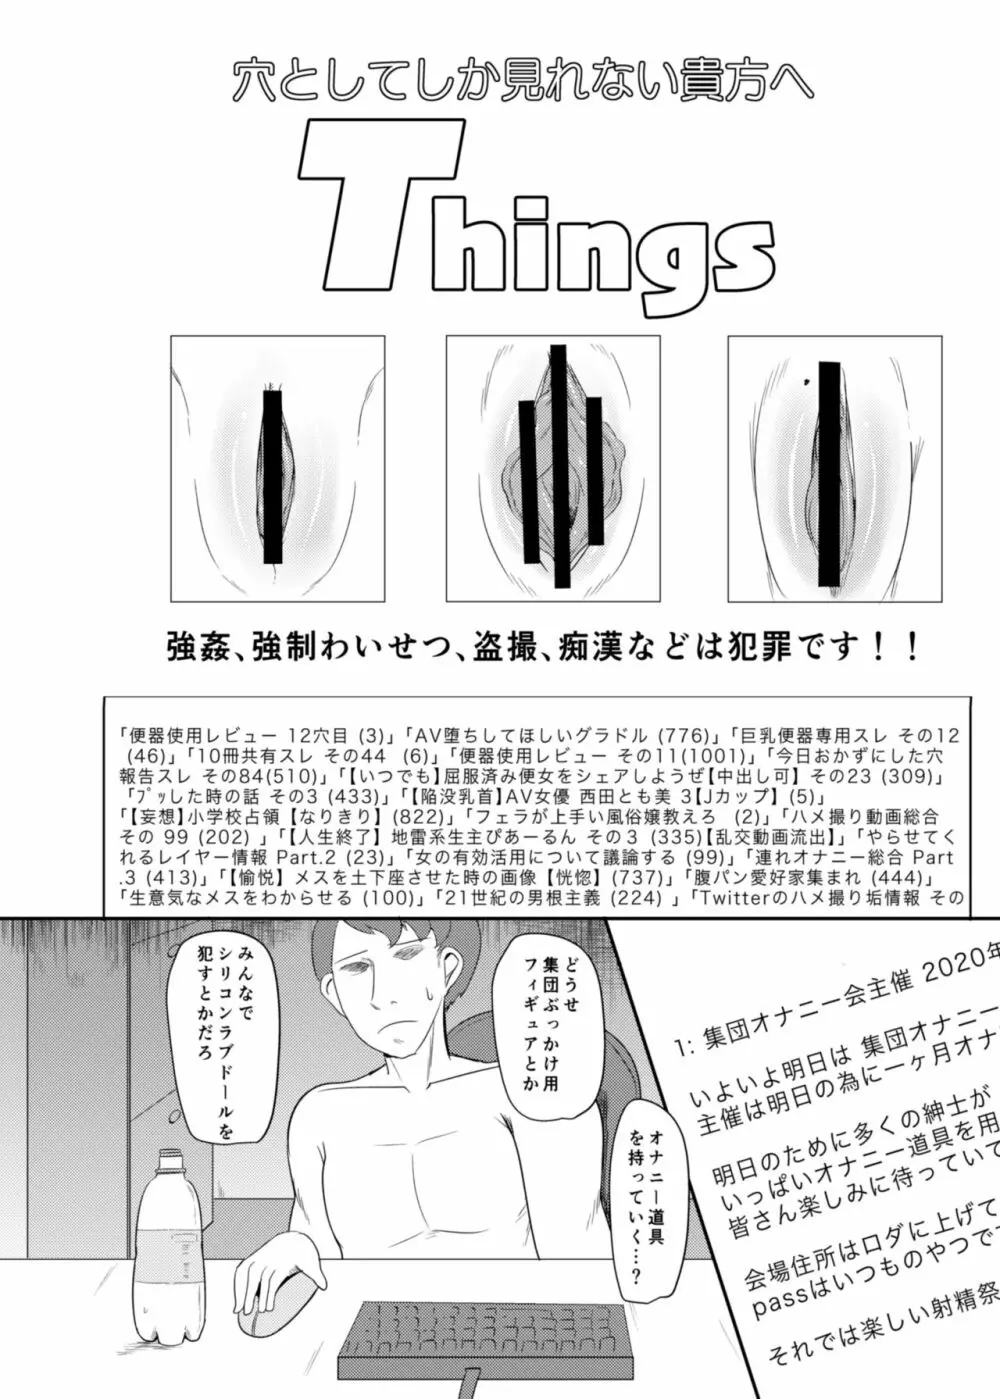 Things2 3ページ